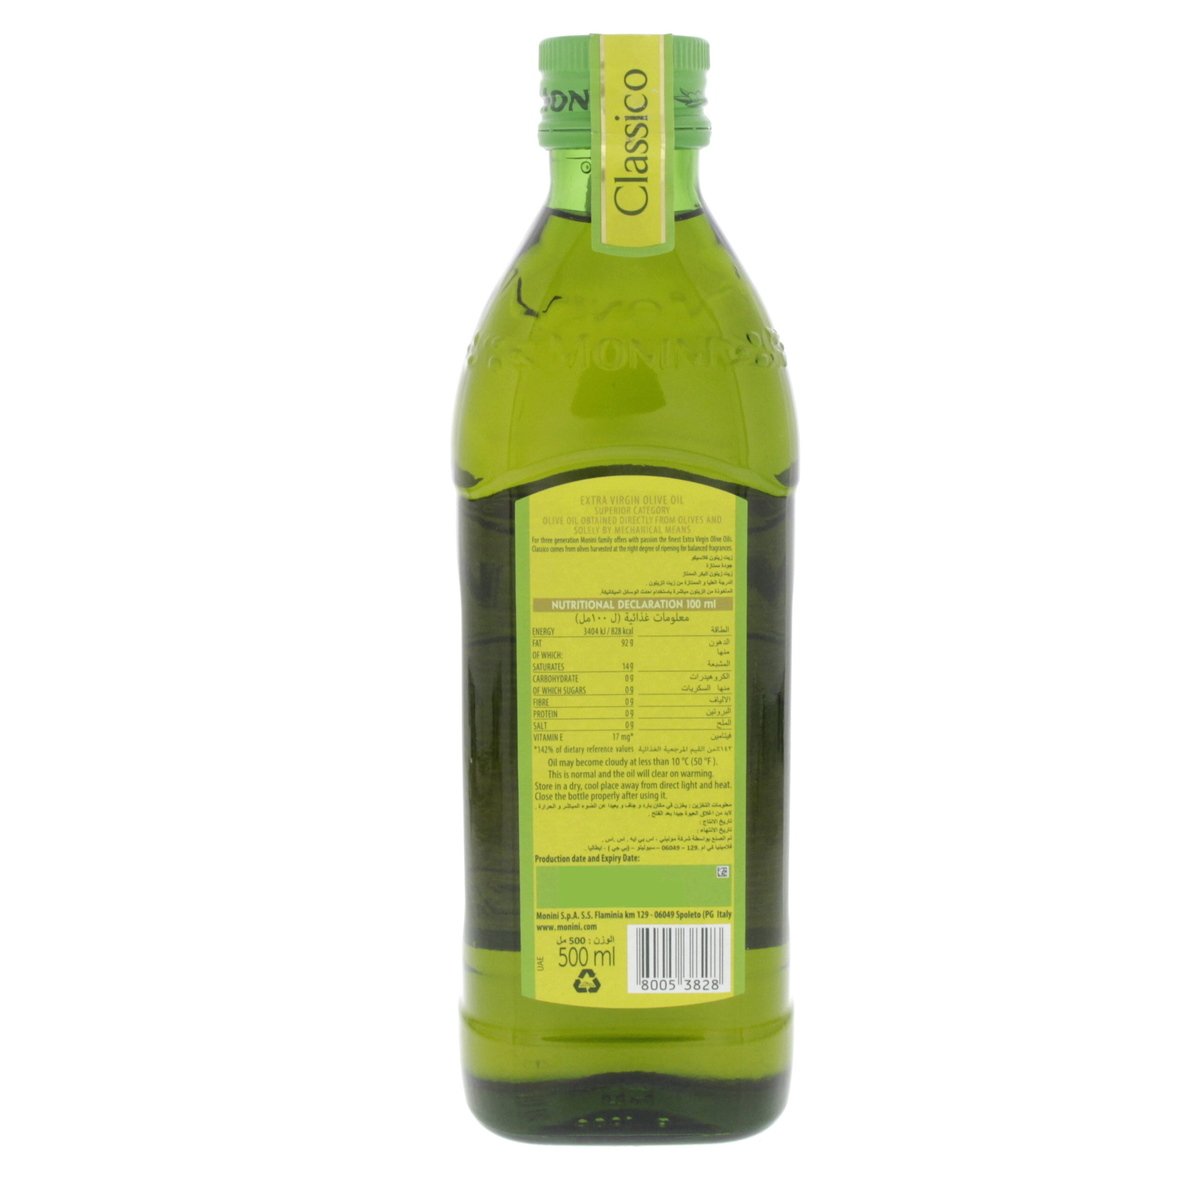 Monini Classico Extra Virgin Olive Oil 500 ml